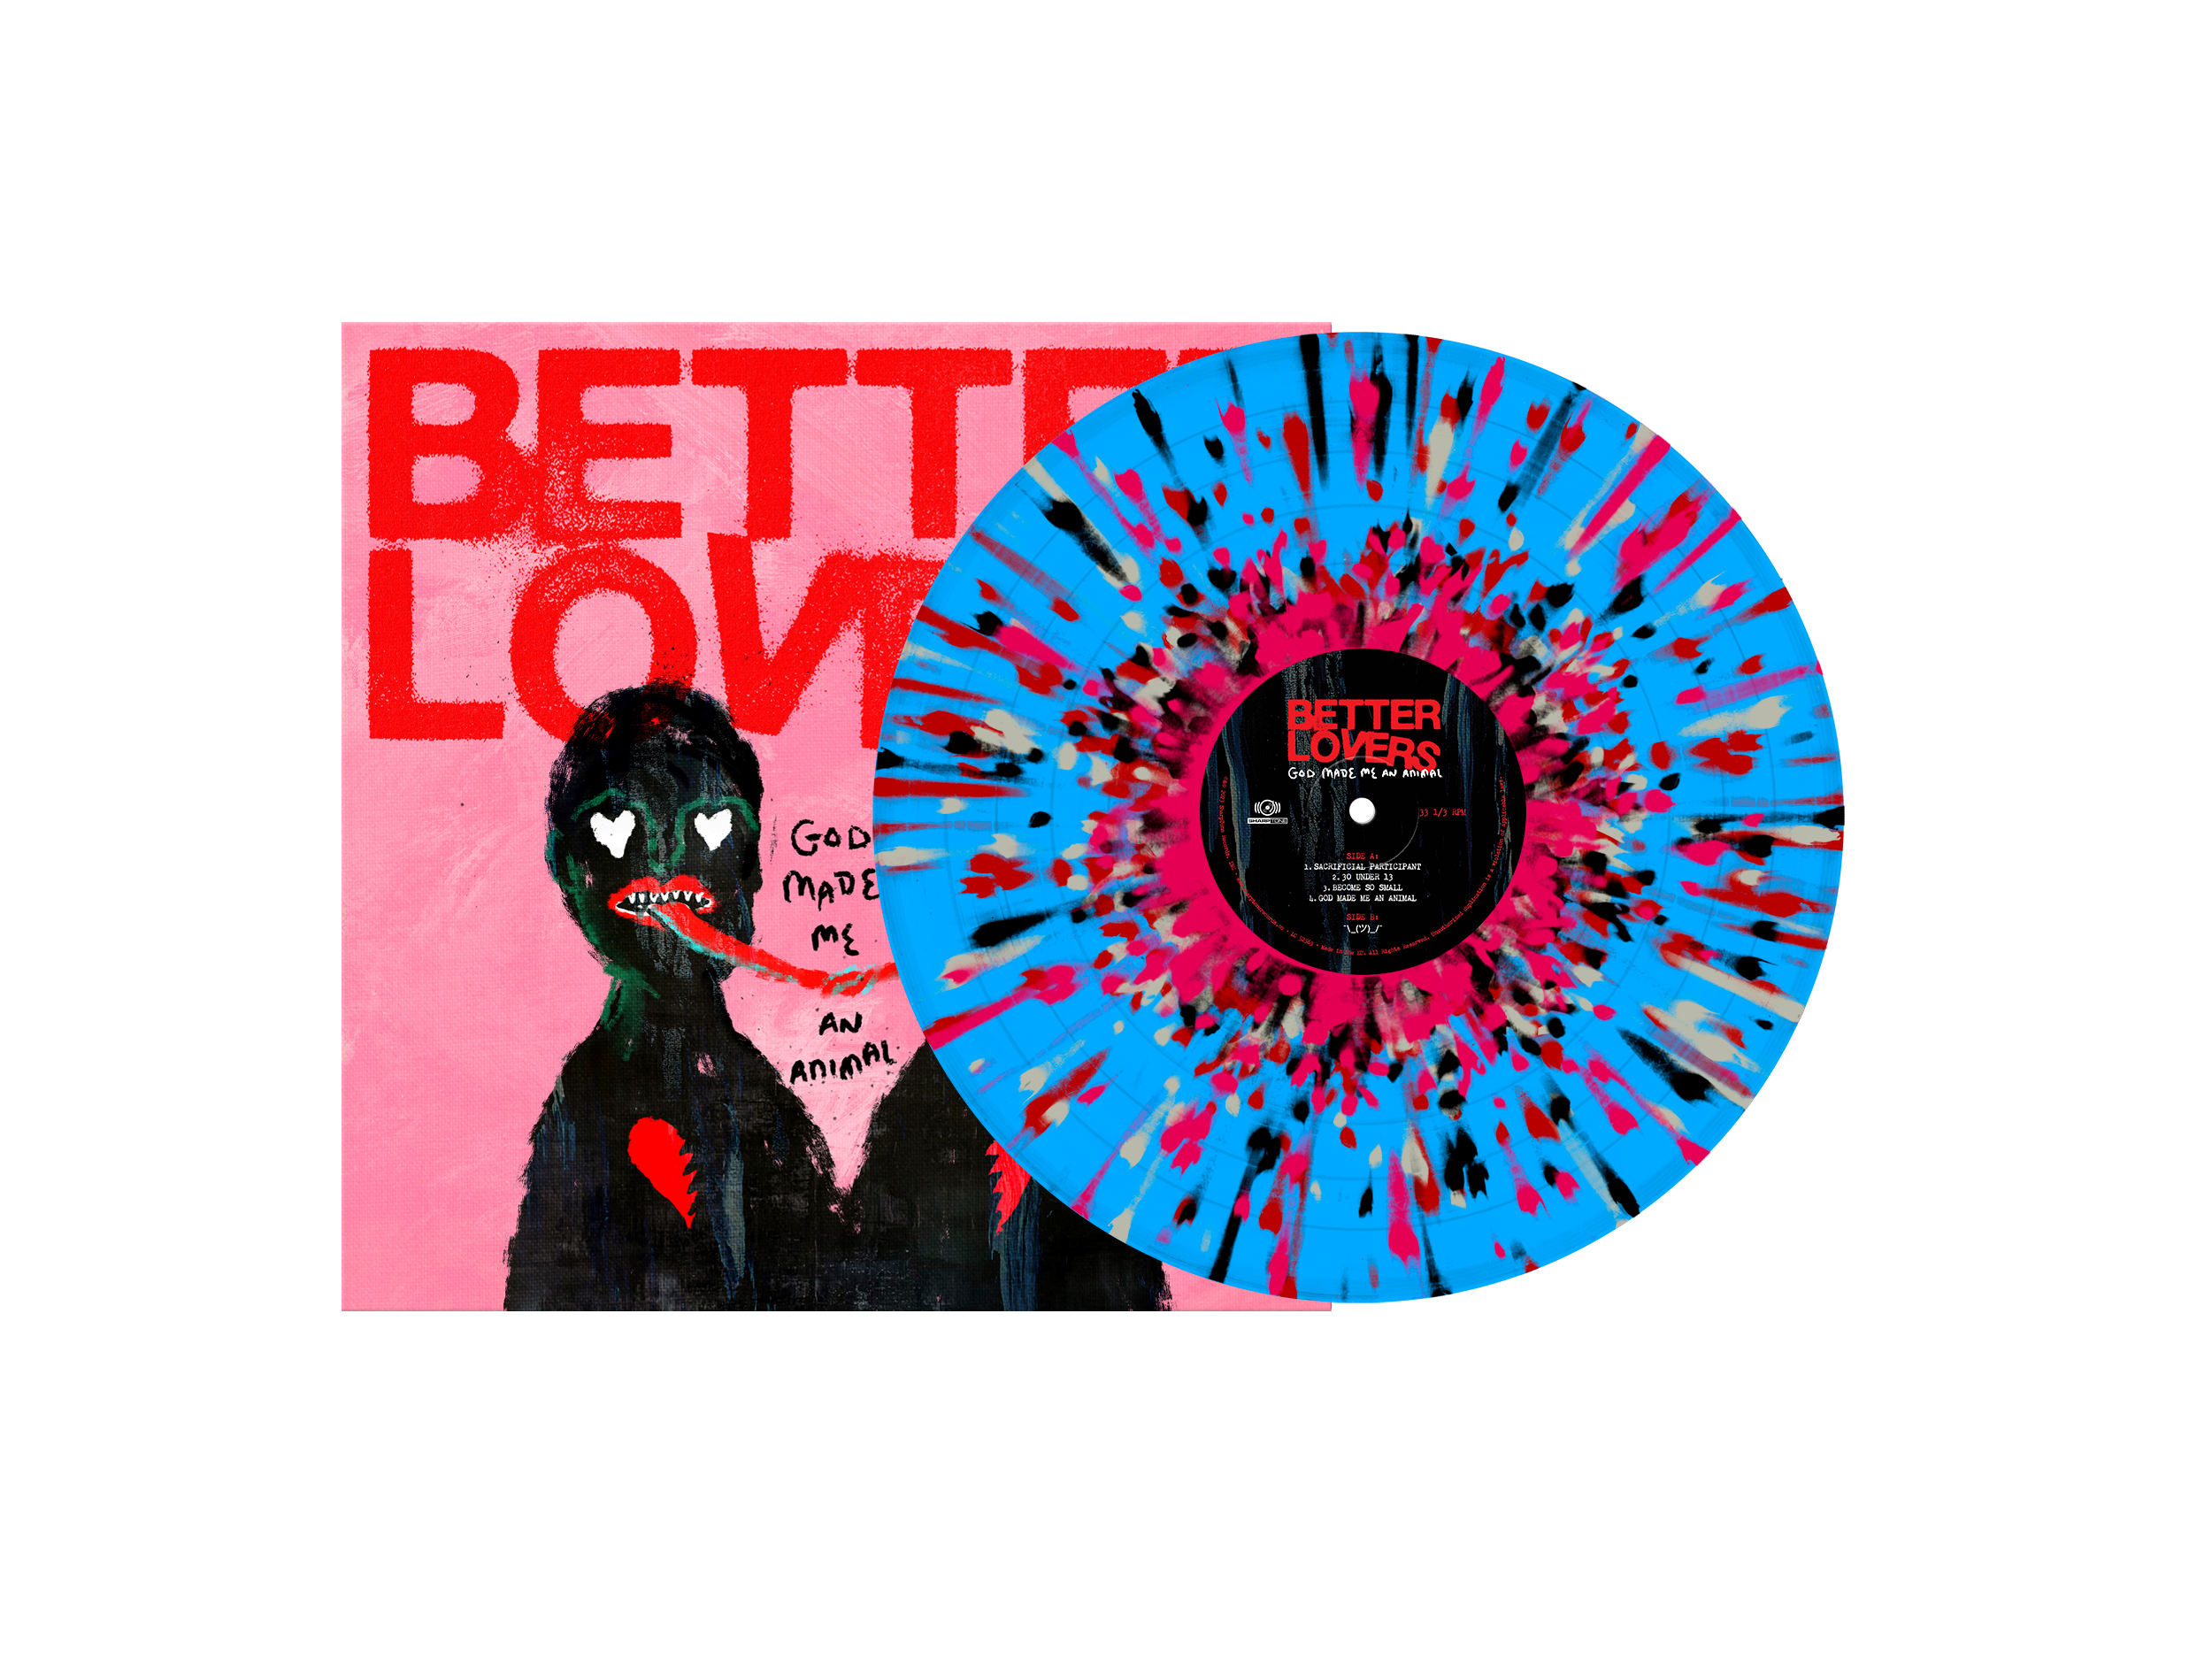 Better Lovers - God Made Me an Animal LP - Turquoise w/ Red, White, Pink, Black Splatter (Pre-Order)